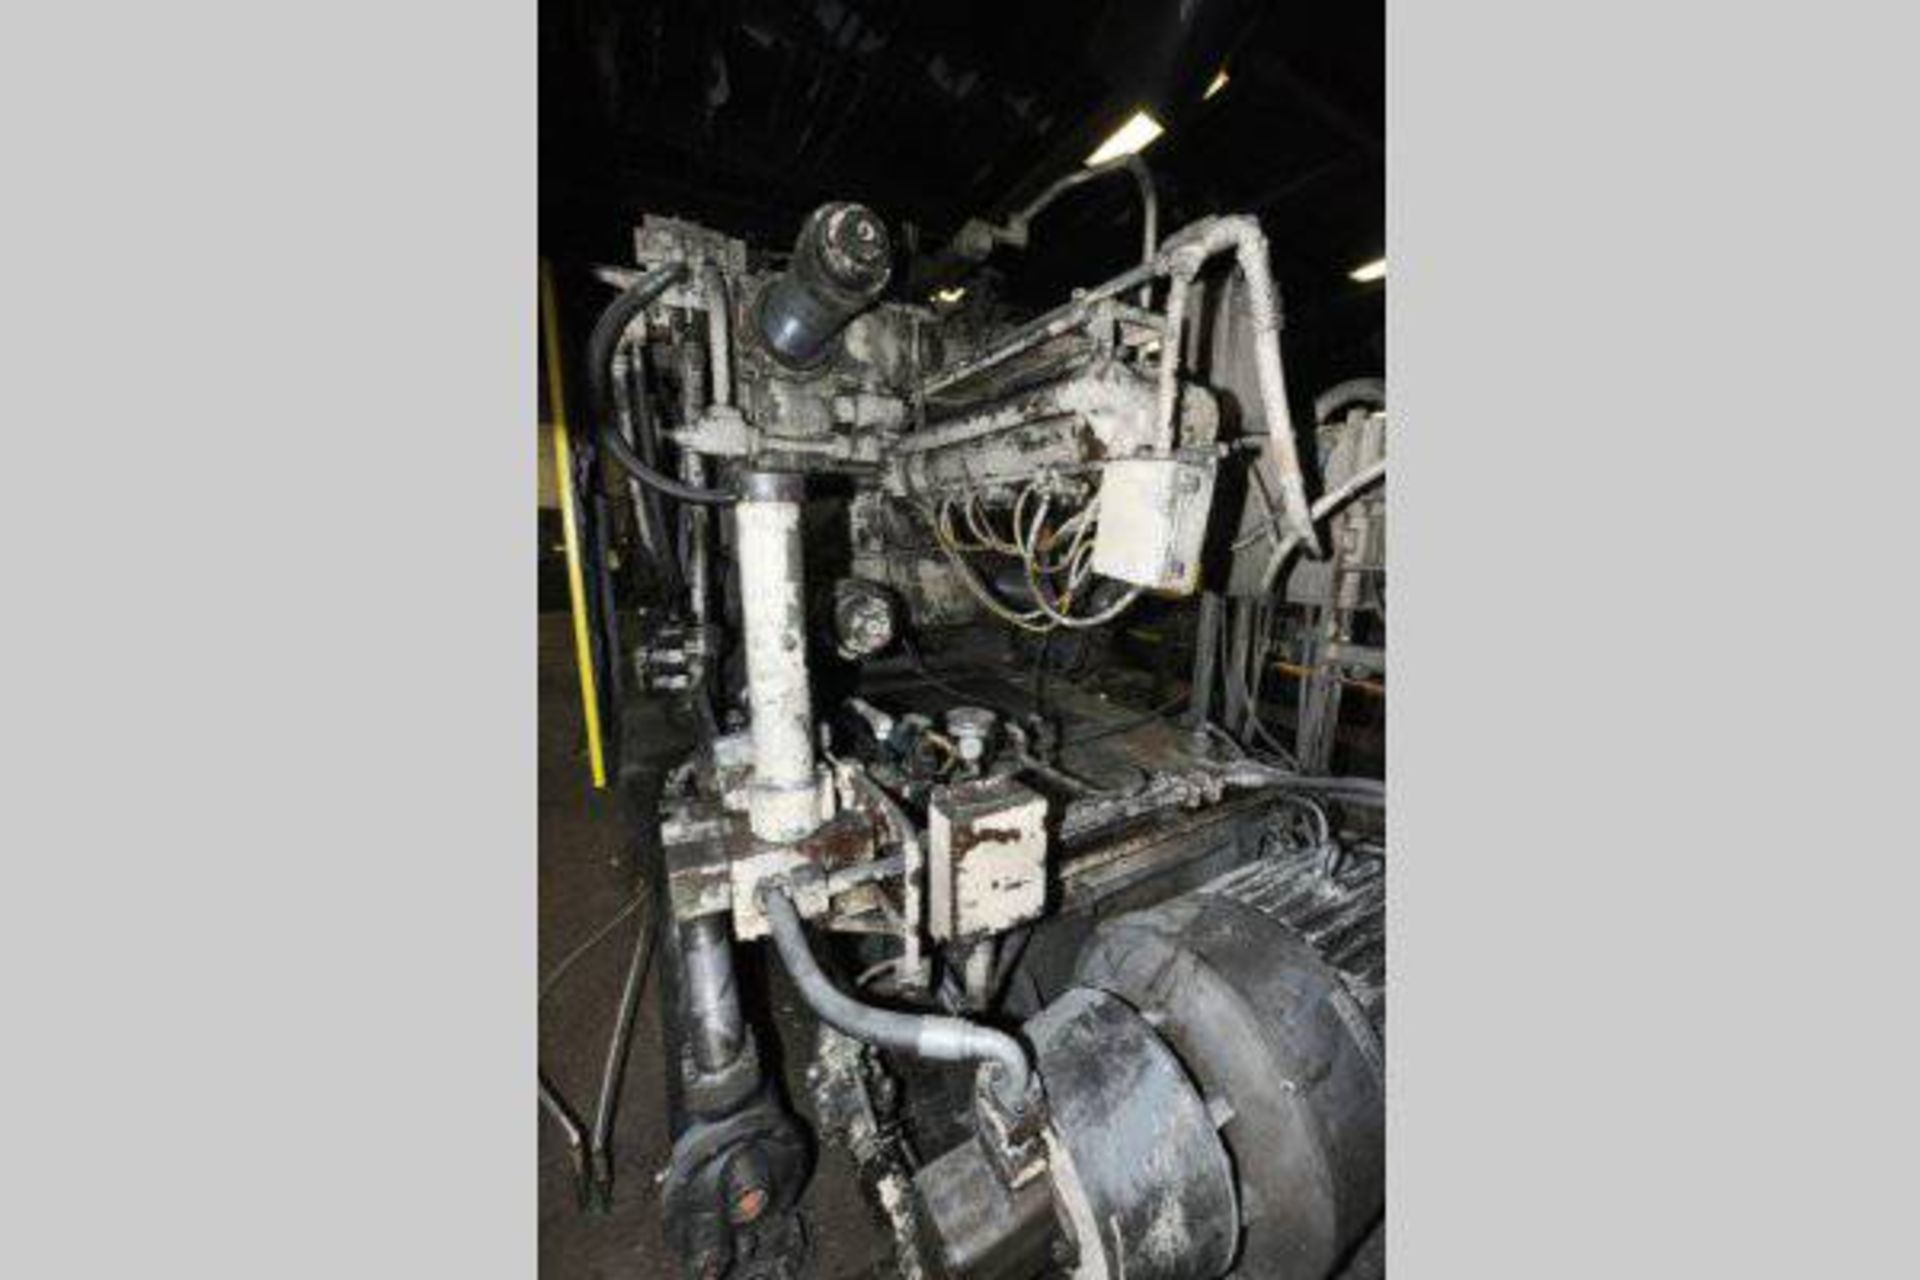 Prince 836 CCA Aluminum High Pressure Die Casting Machine - Image 26 of 26